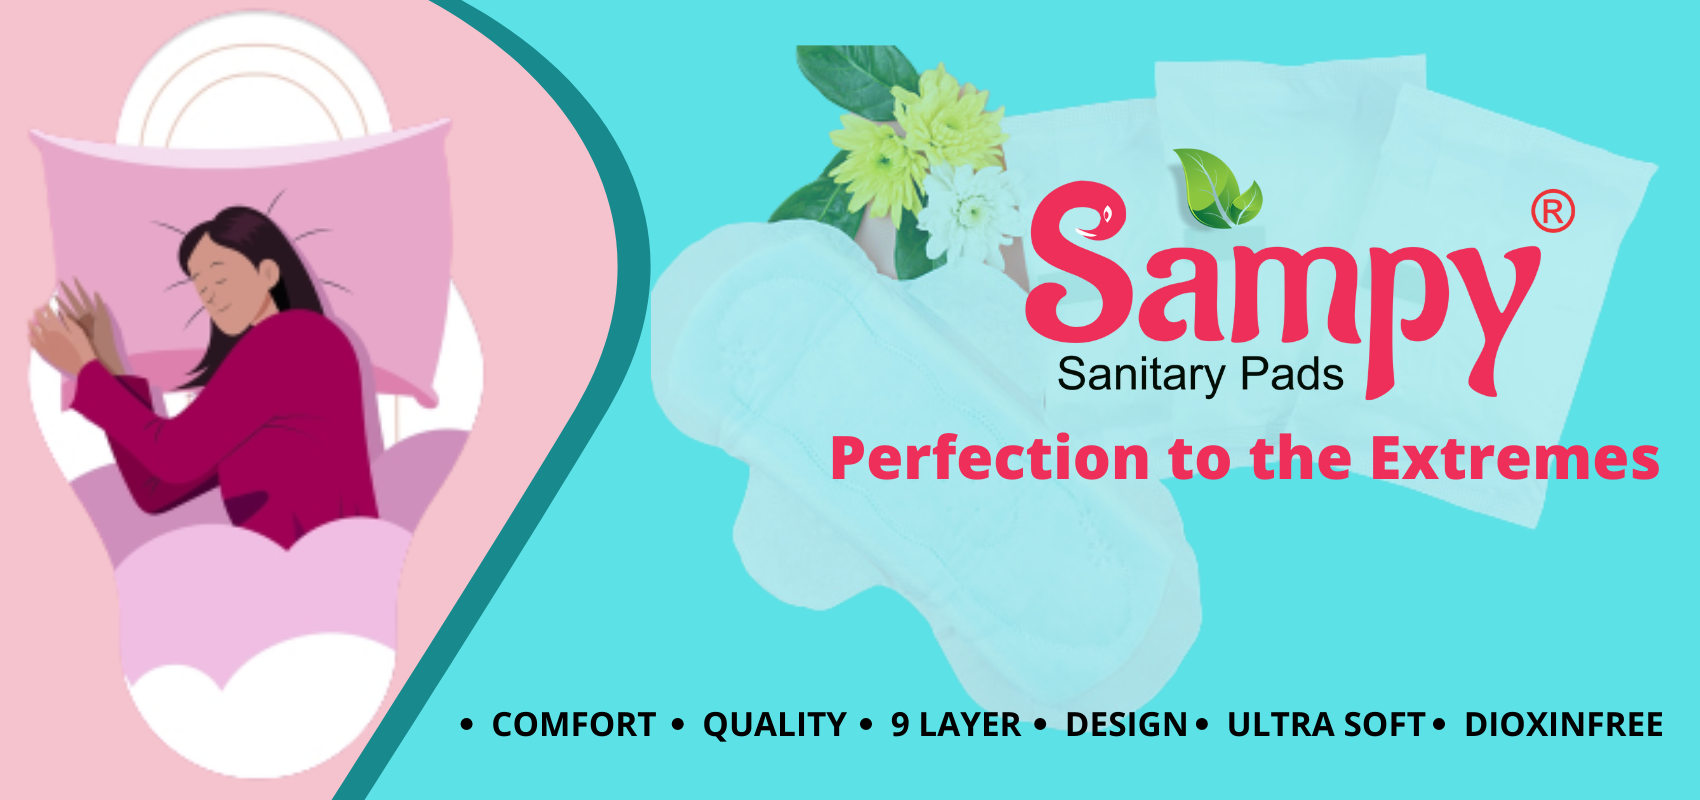 Sampy Sanitary Pads